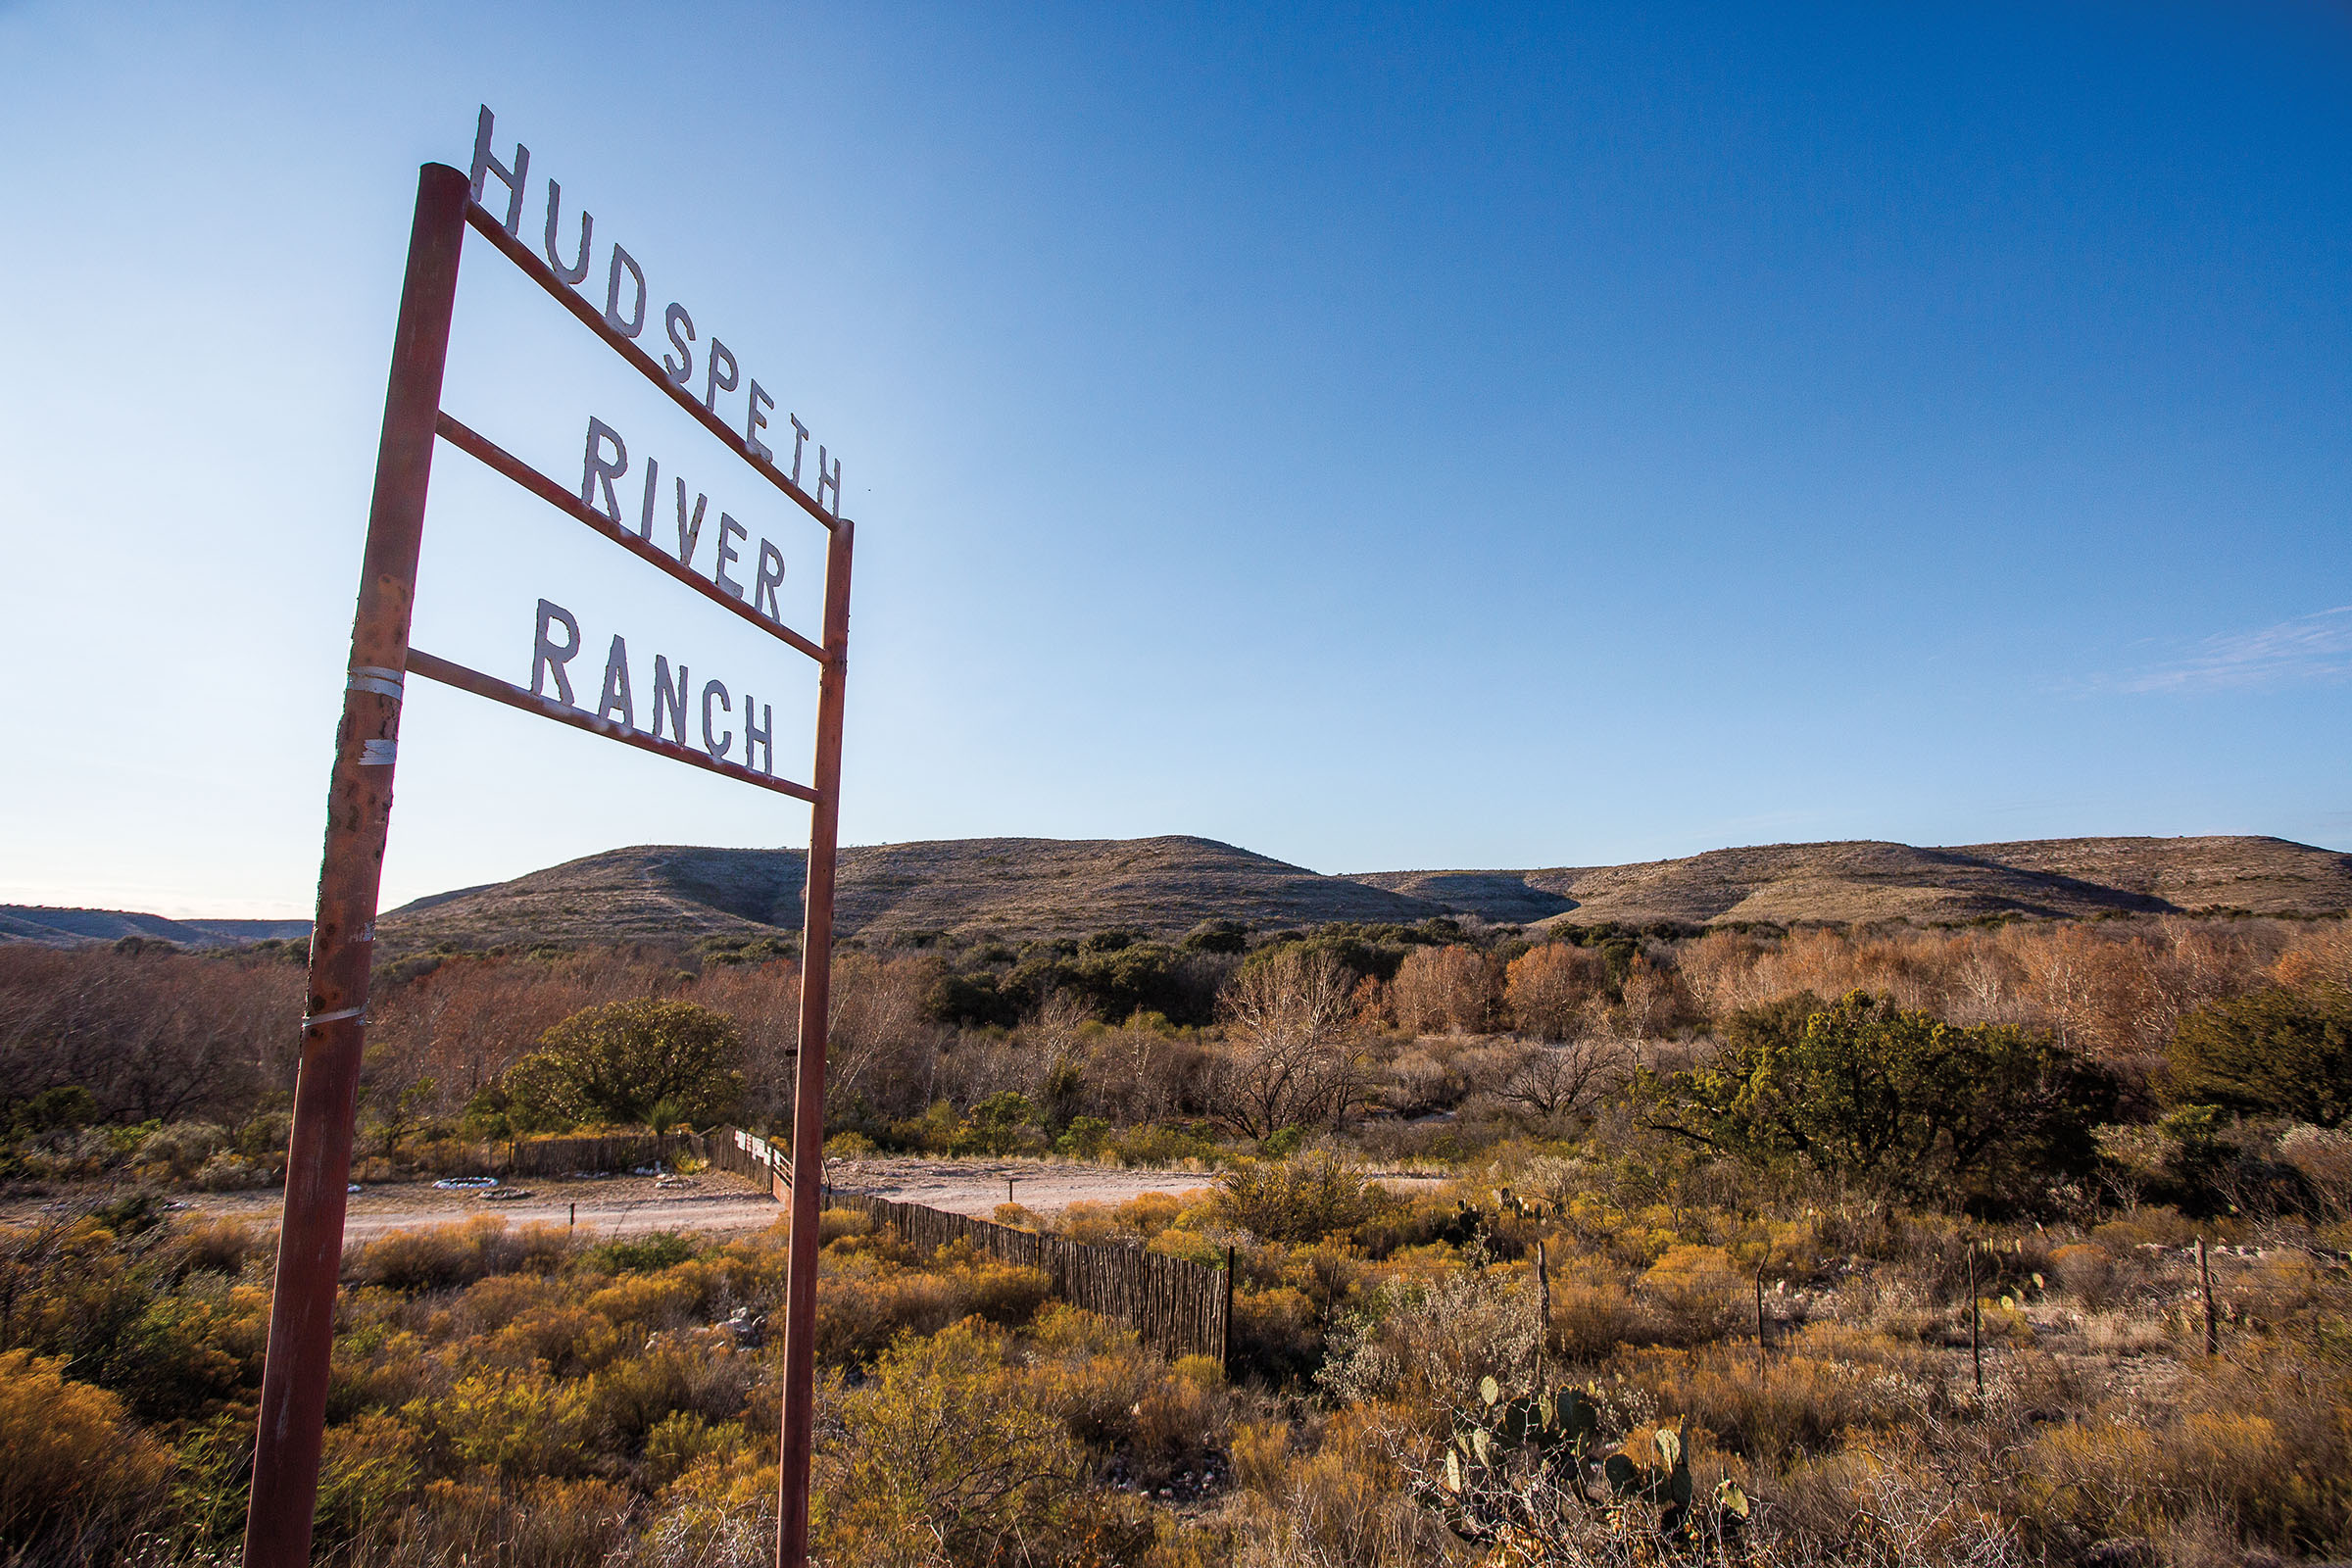 An iron sign reading "Hudspeth River Ranch" beneath a blue sky